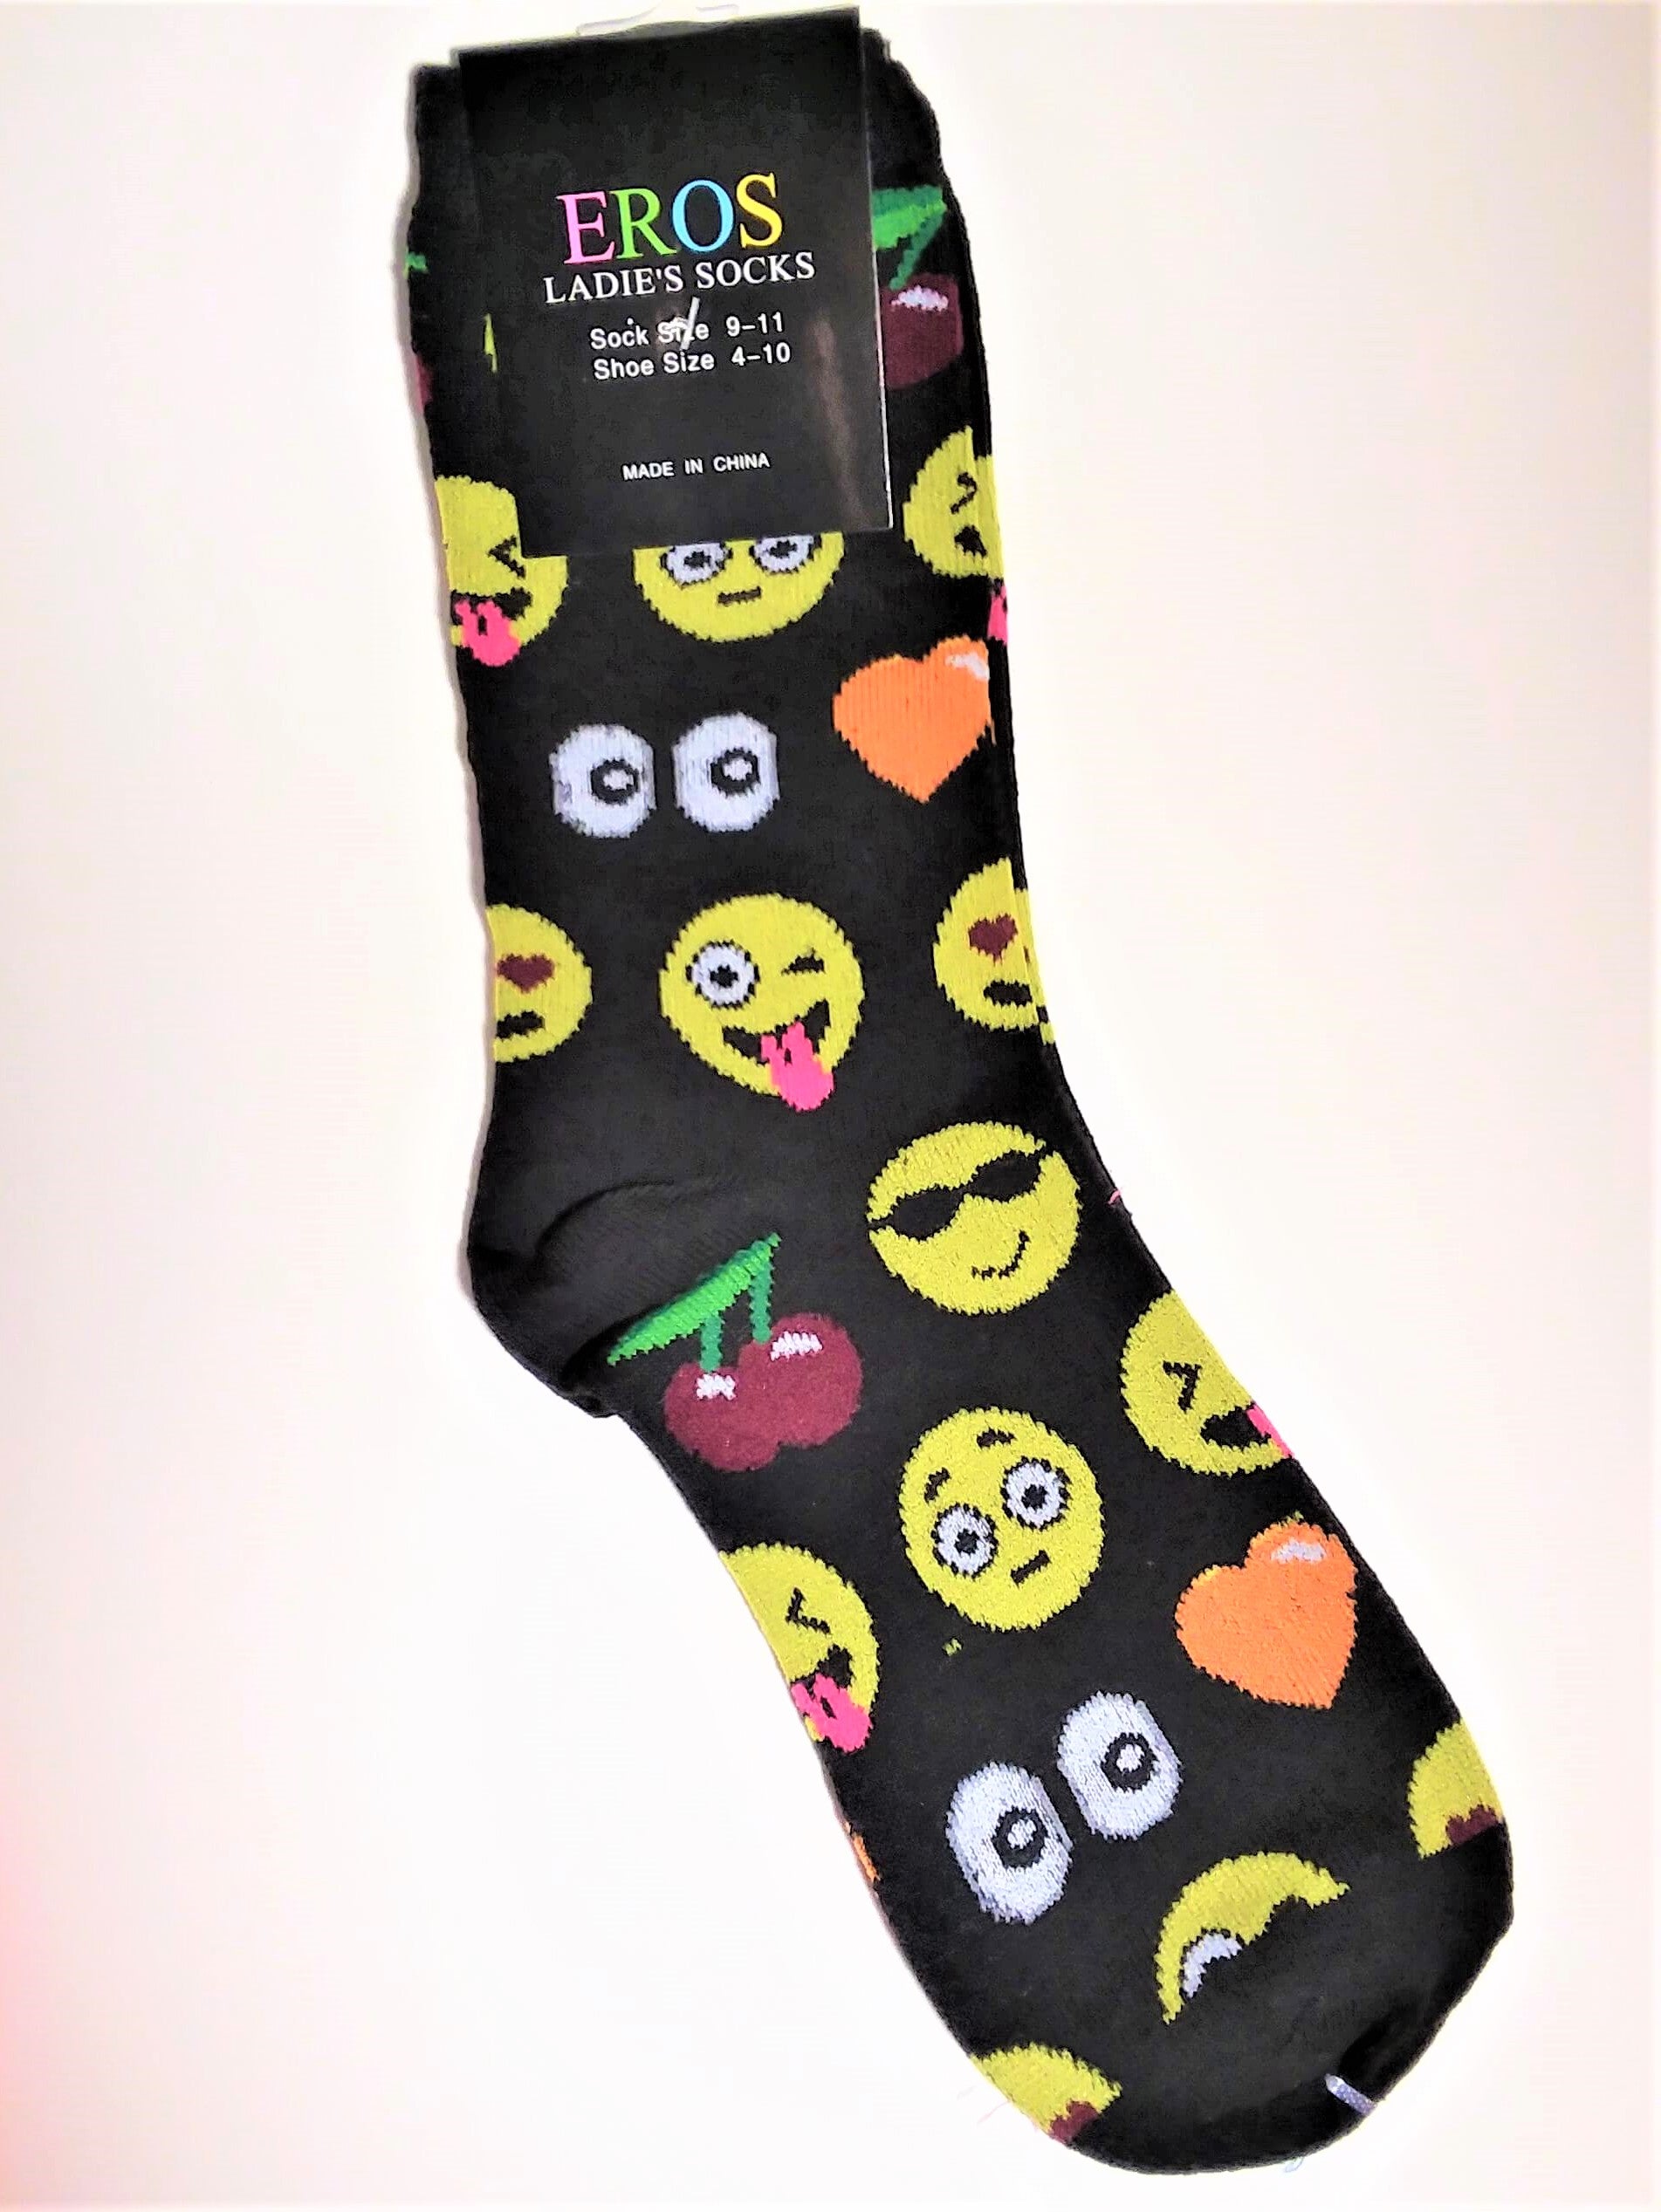 Emoji Socks Gift Box for Women!